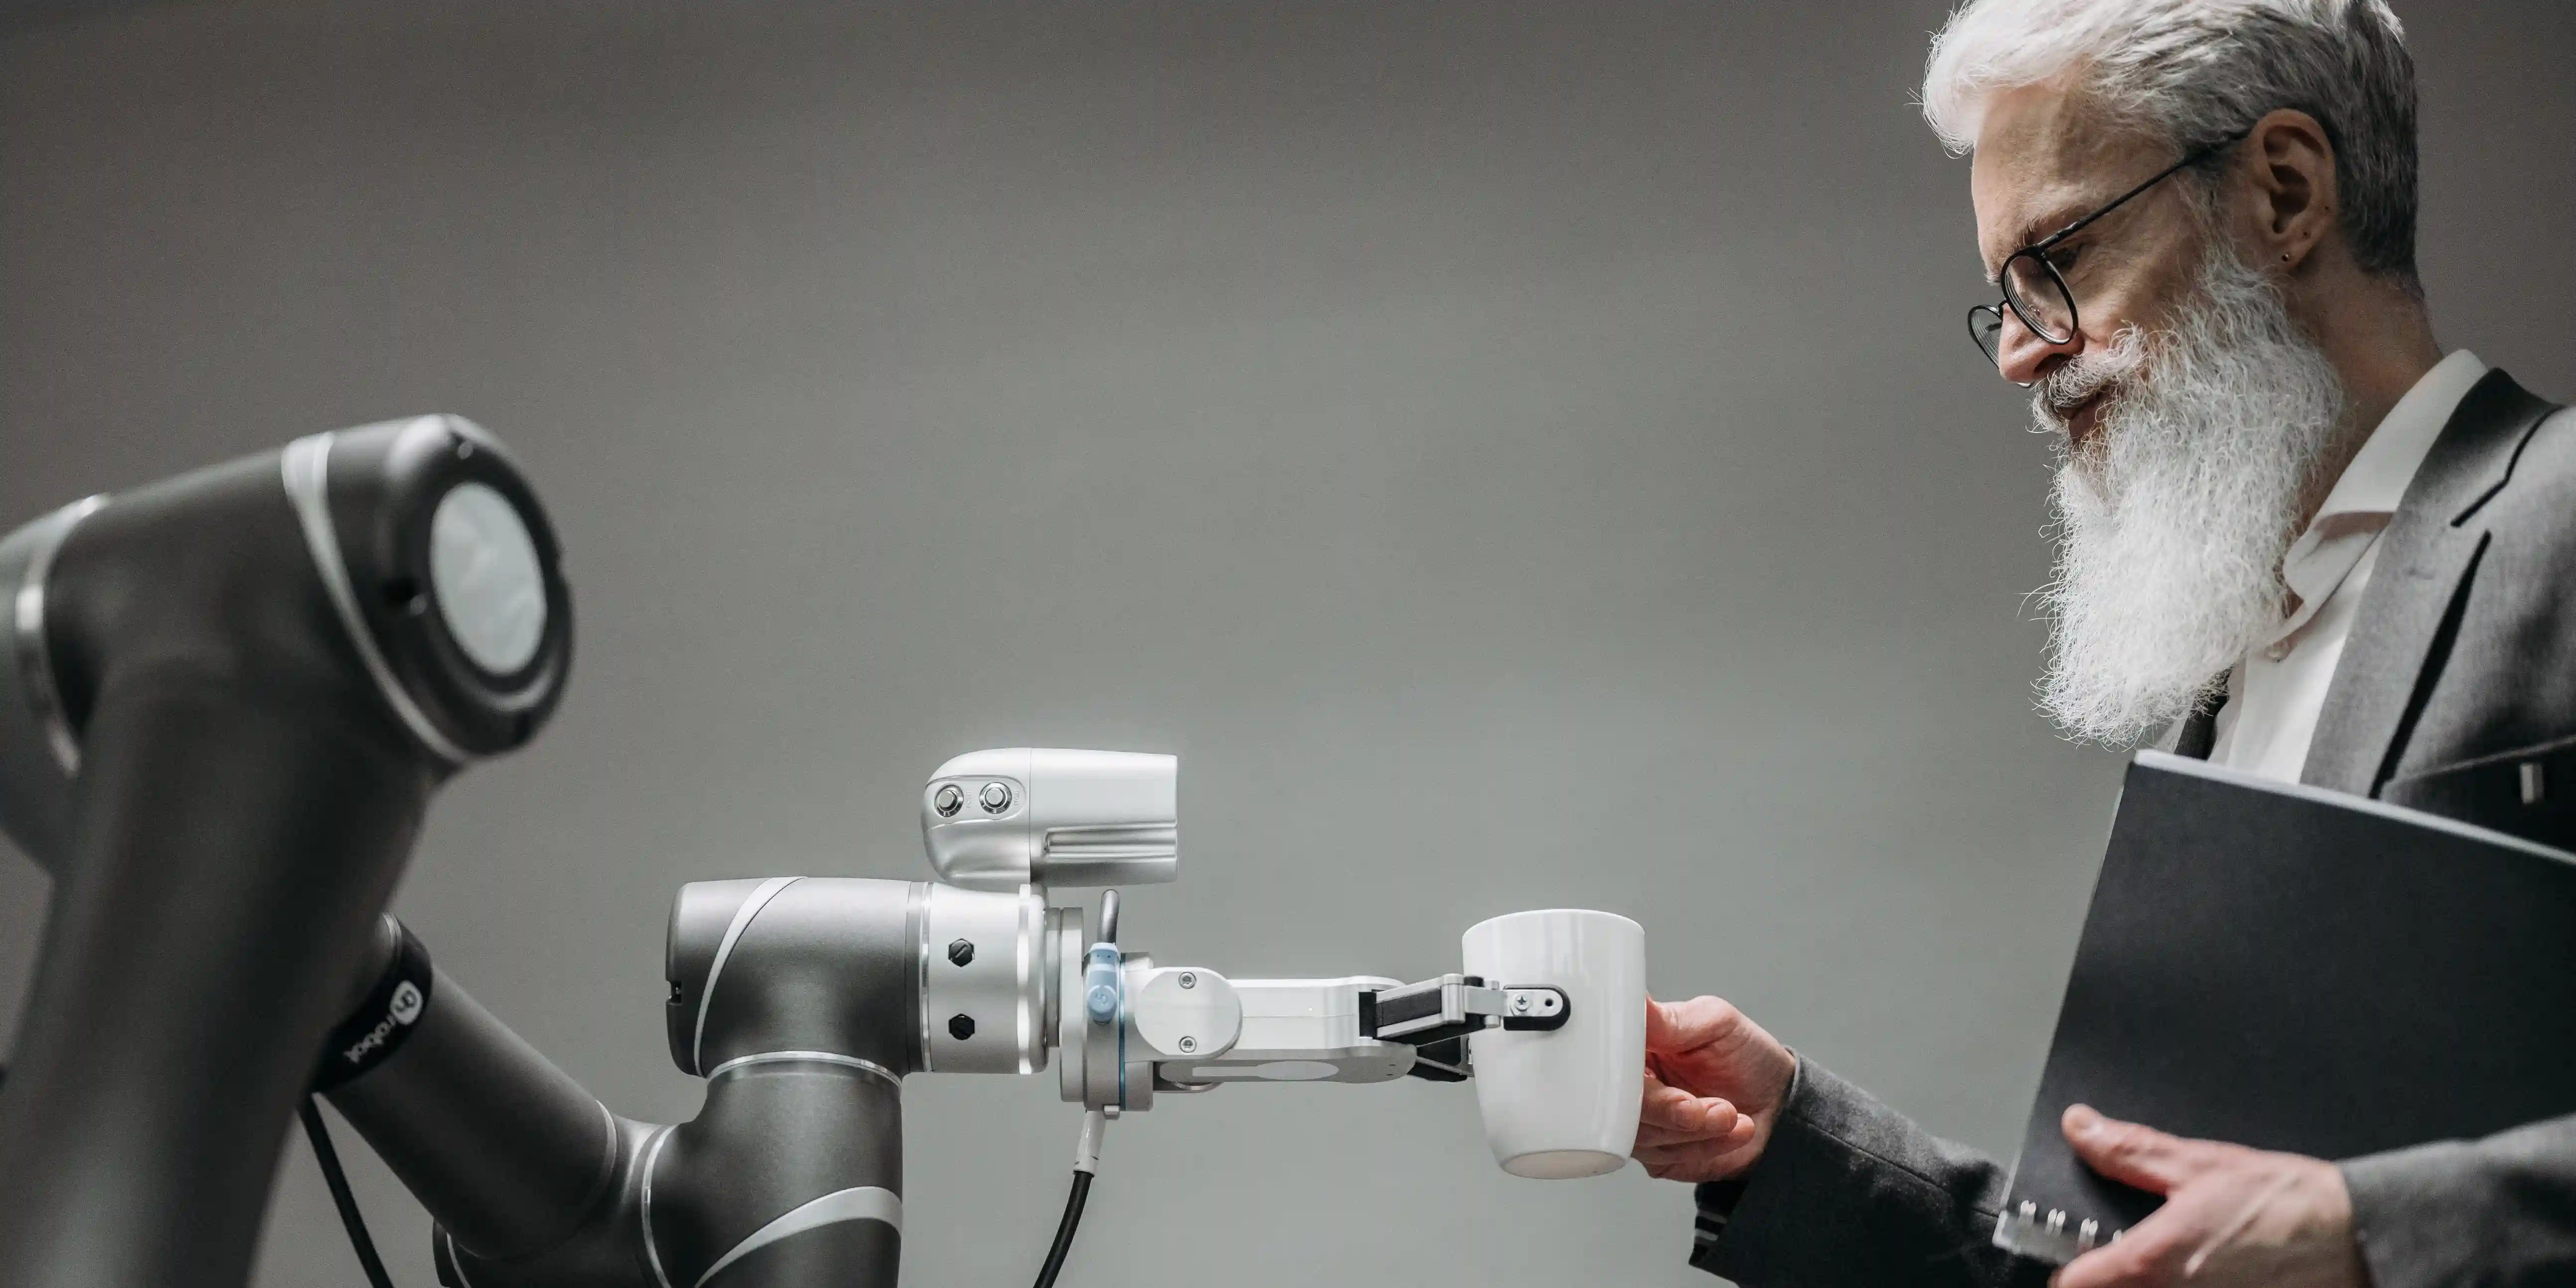 AI robot serving coffee to human